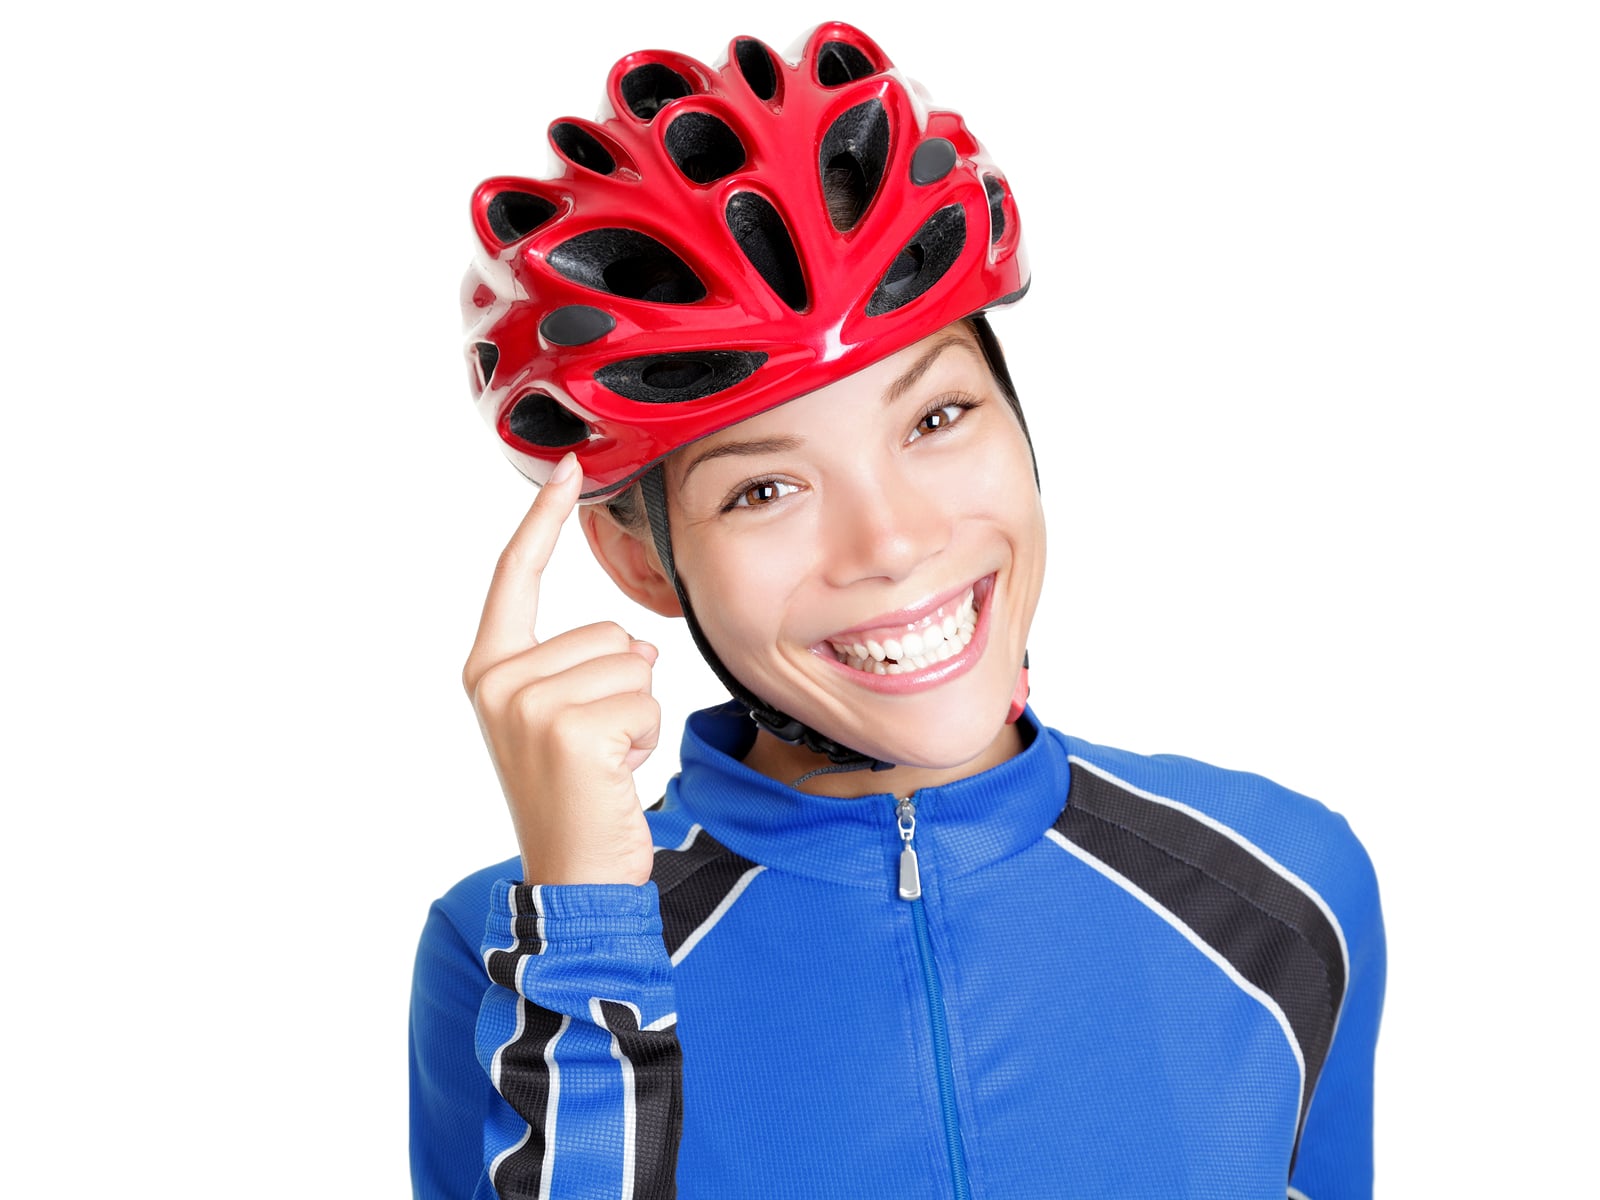 List of the Best Bike Helmets